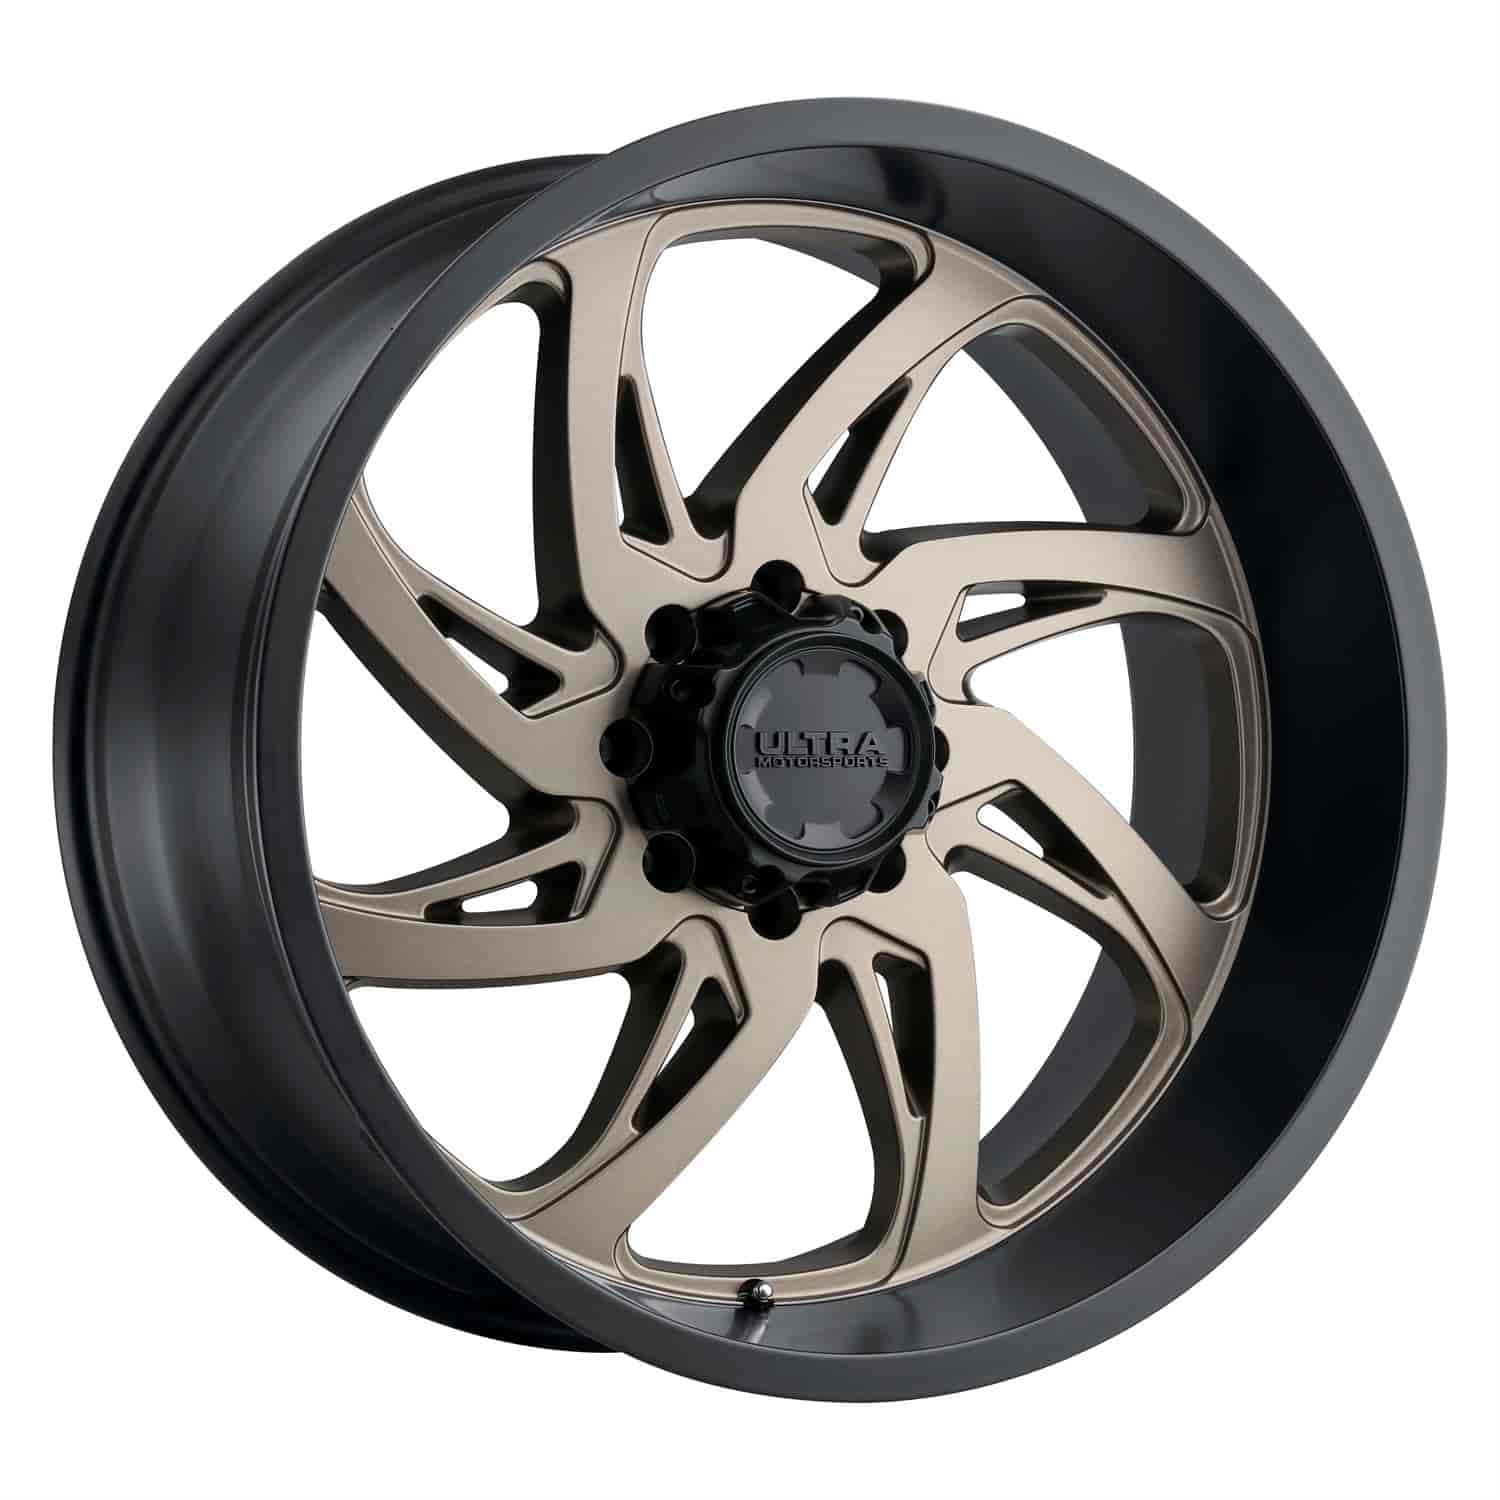 230-Series Villain Wheel, Size: 24x12", Bolt Pattern: 8x170 mm [Dark Satin Bronze w/Satin Black Lip]